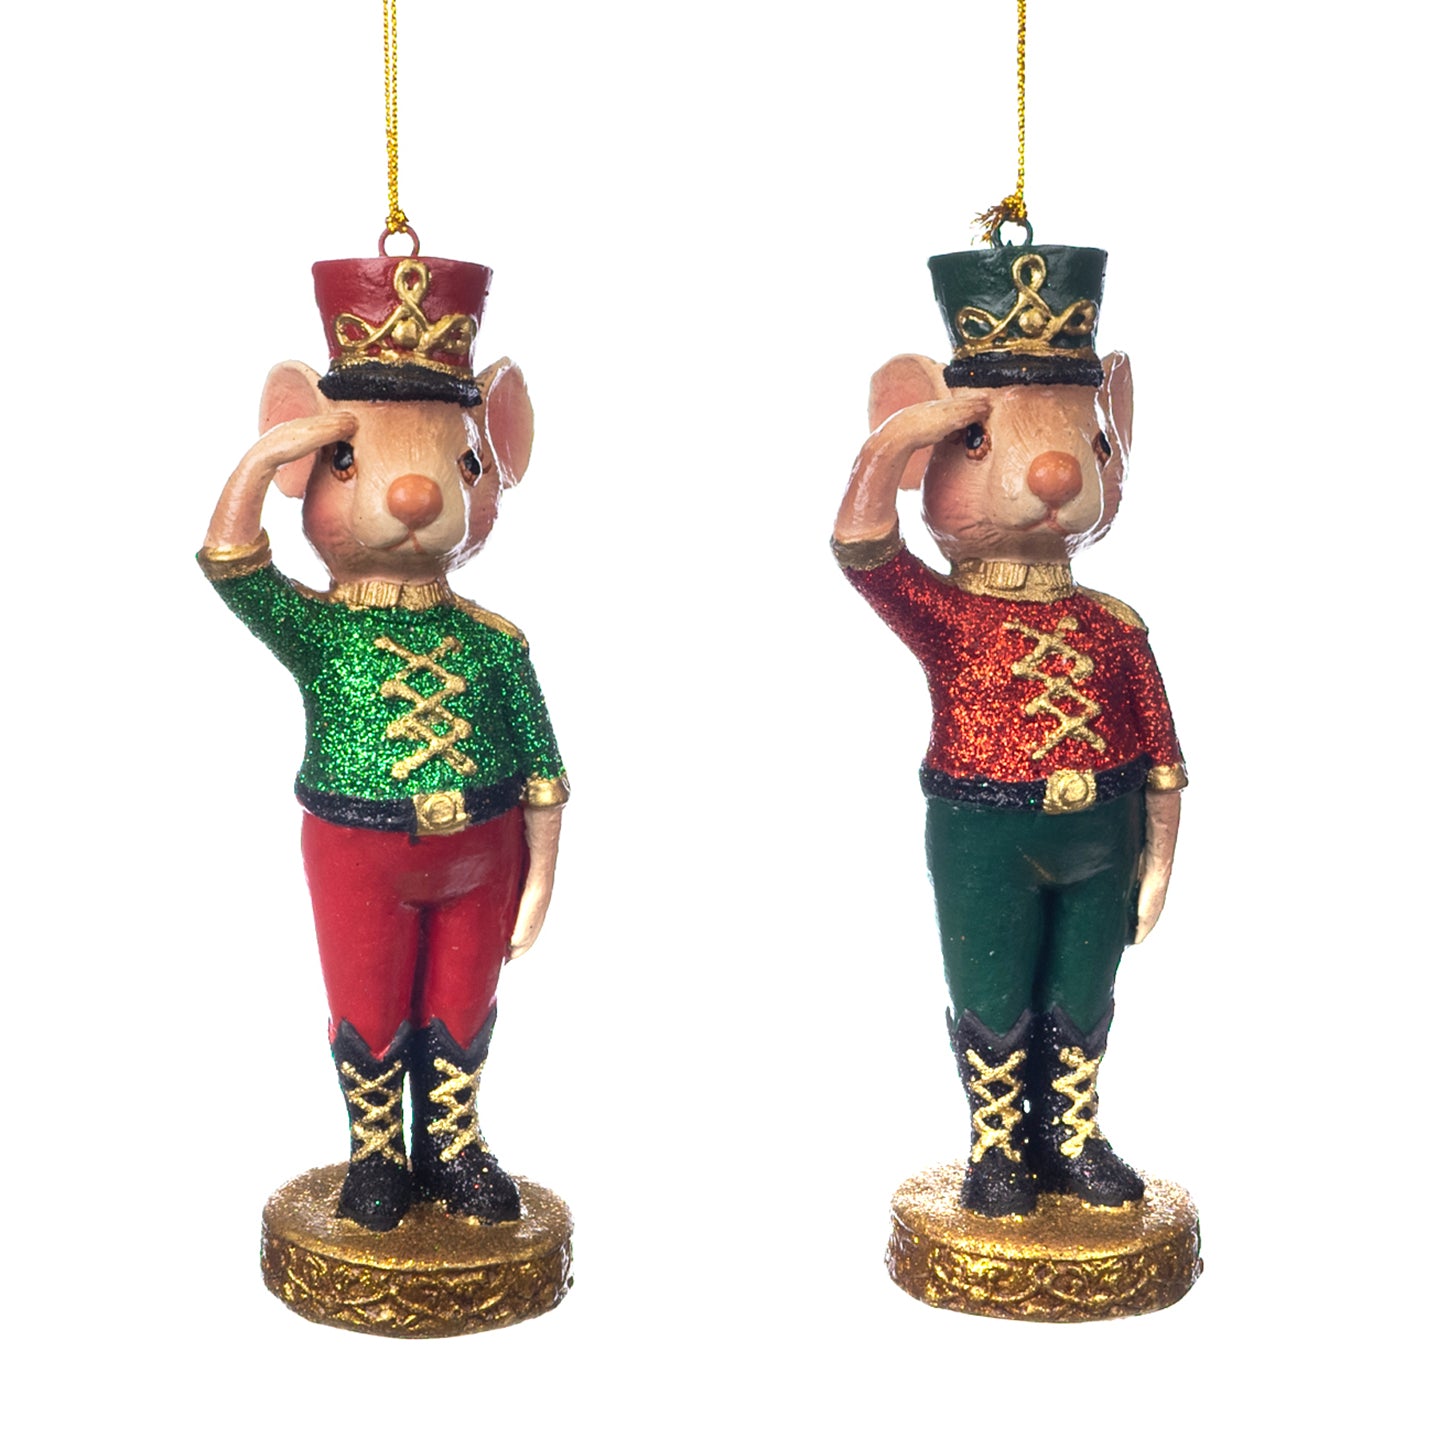 Goodwill Belgium Saluting Nutcracker Mouse Ornament